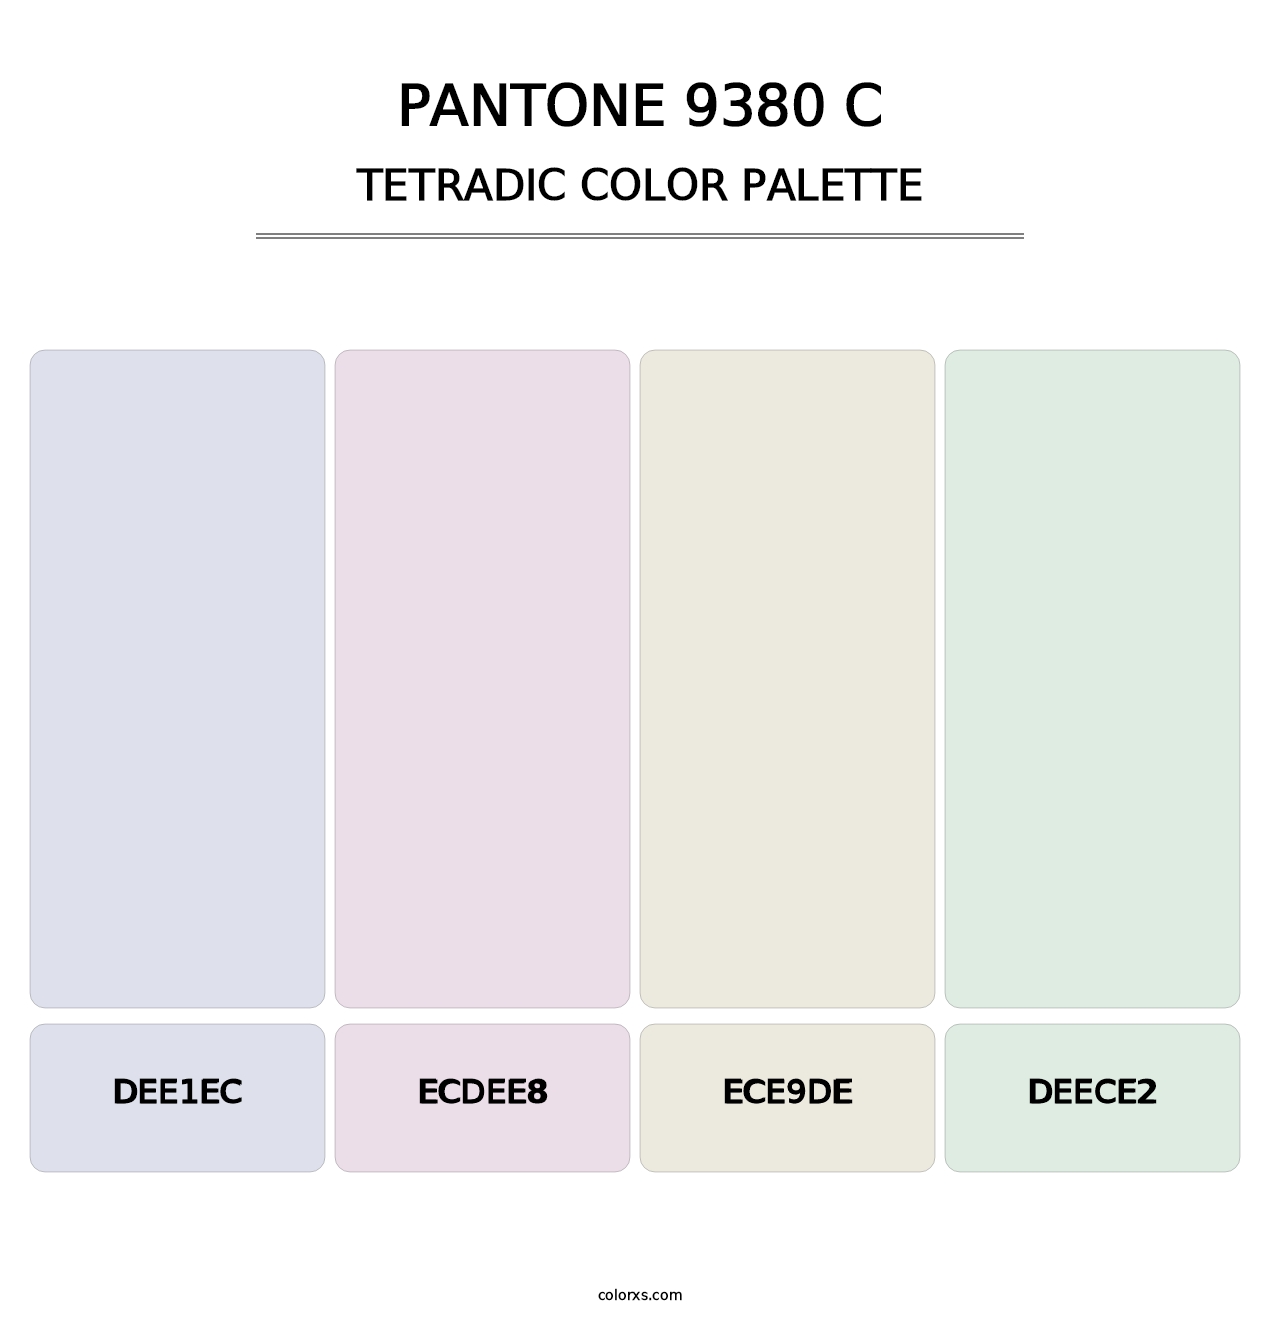 PANTONE 9380 C - Tetradic Color Palette